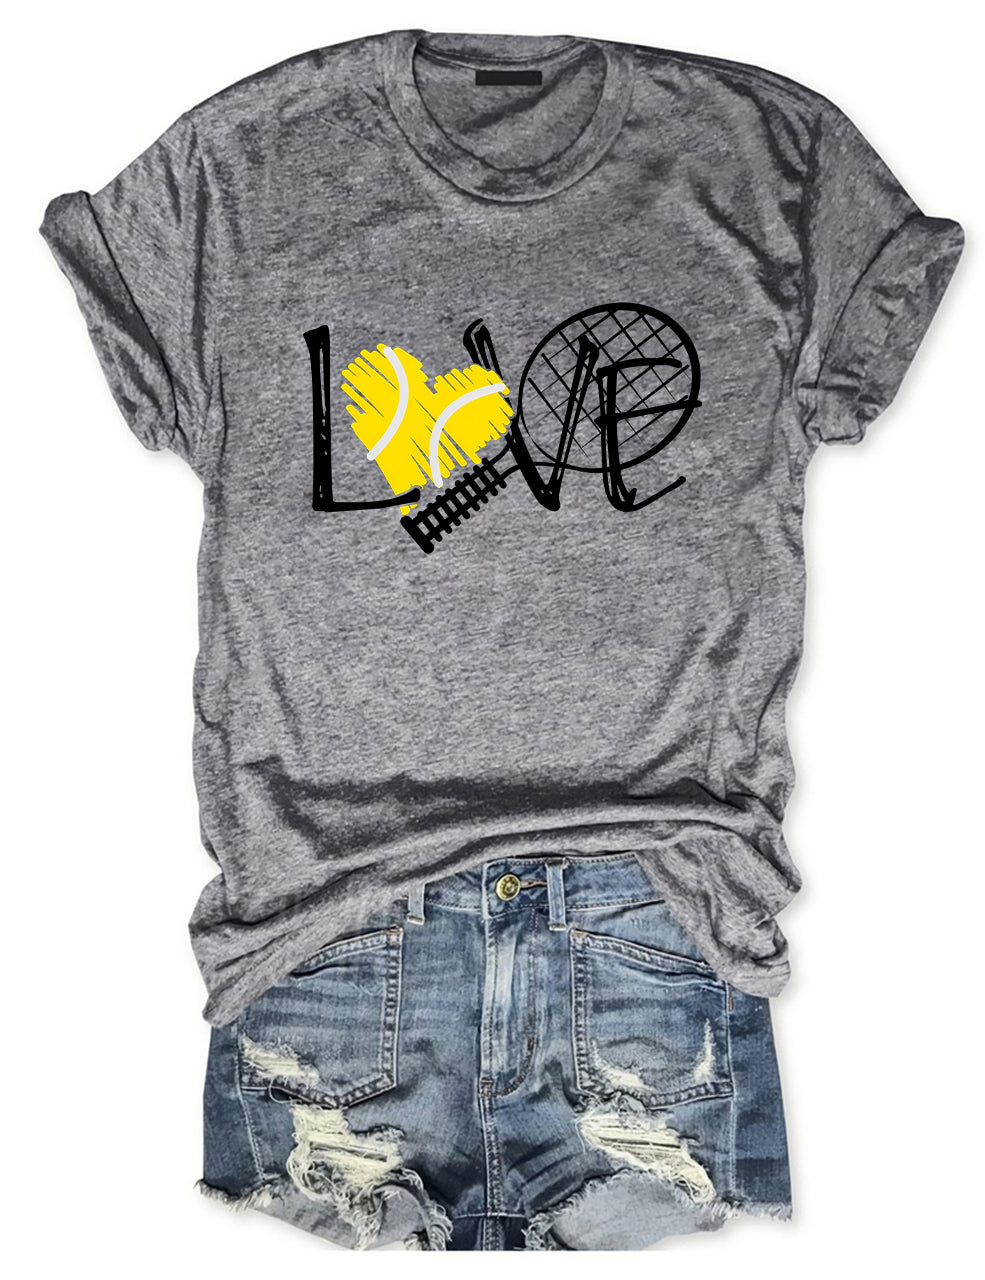 Love Tennis T-shirt